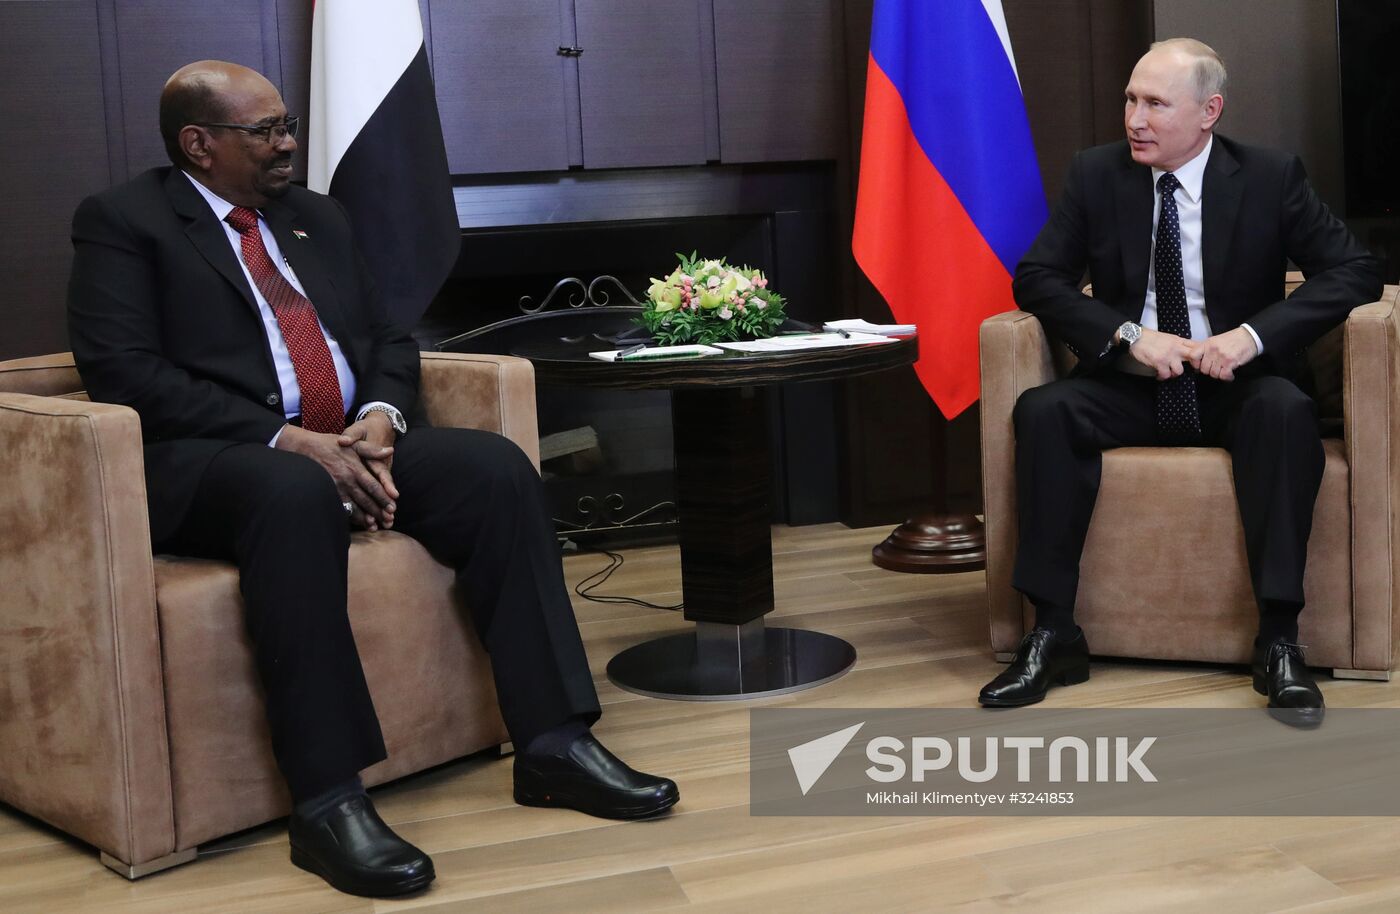 President Putin meets with President al-Bashir of Sudan